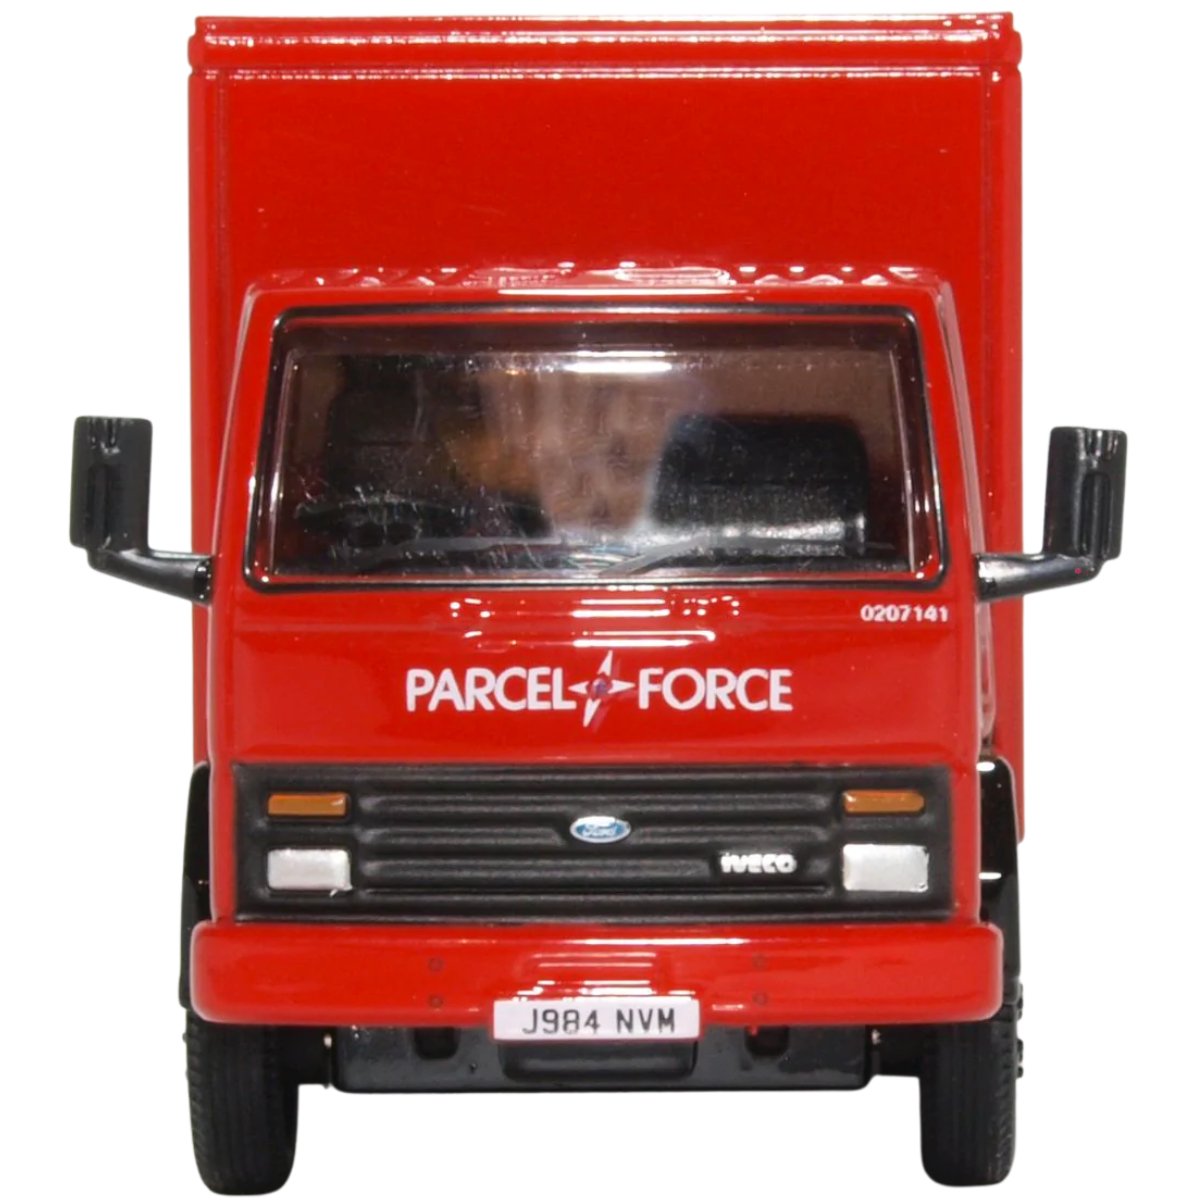 Oxford Diecast 76FCG005 Ford Cargo Box Van Parcelforce - Phillips Hobbies